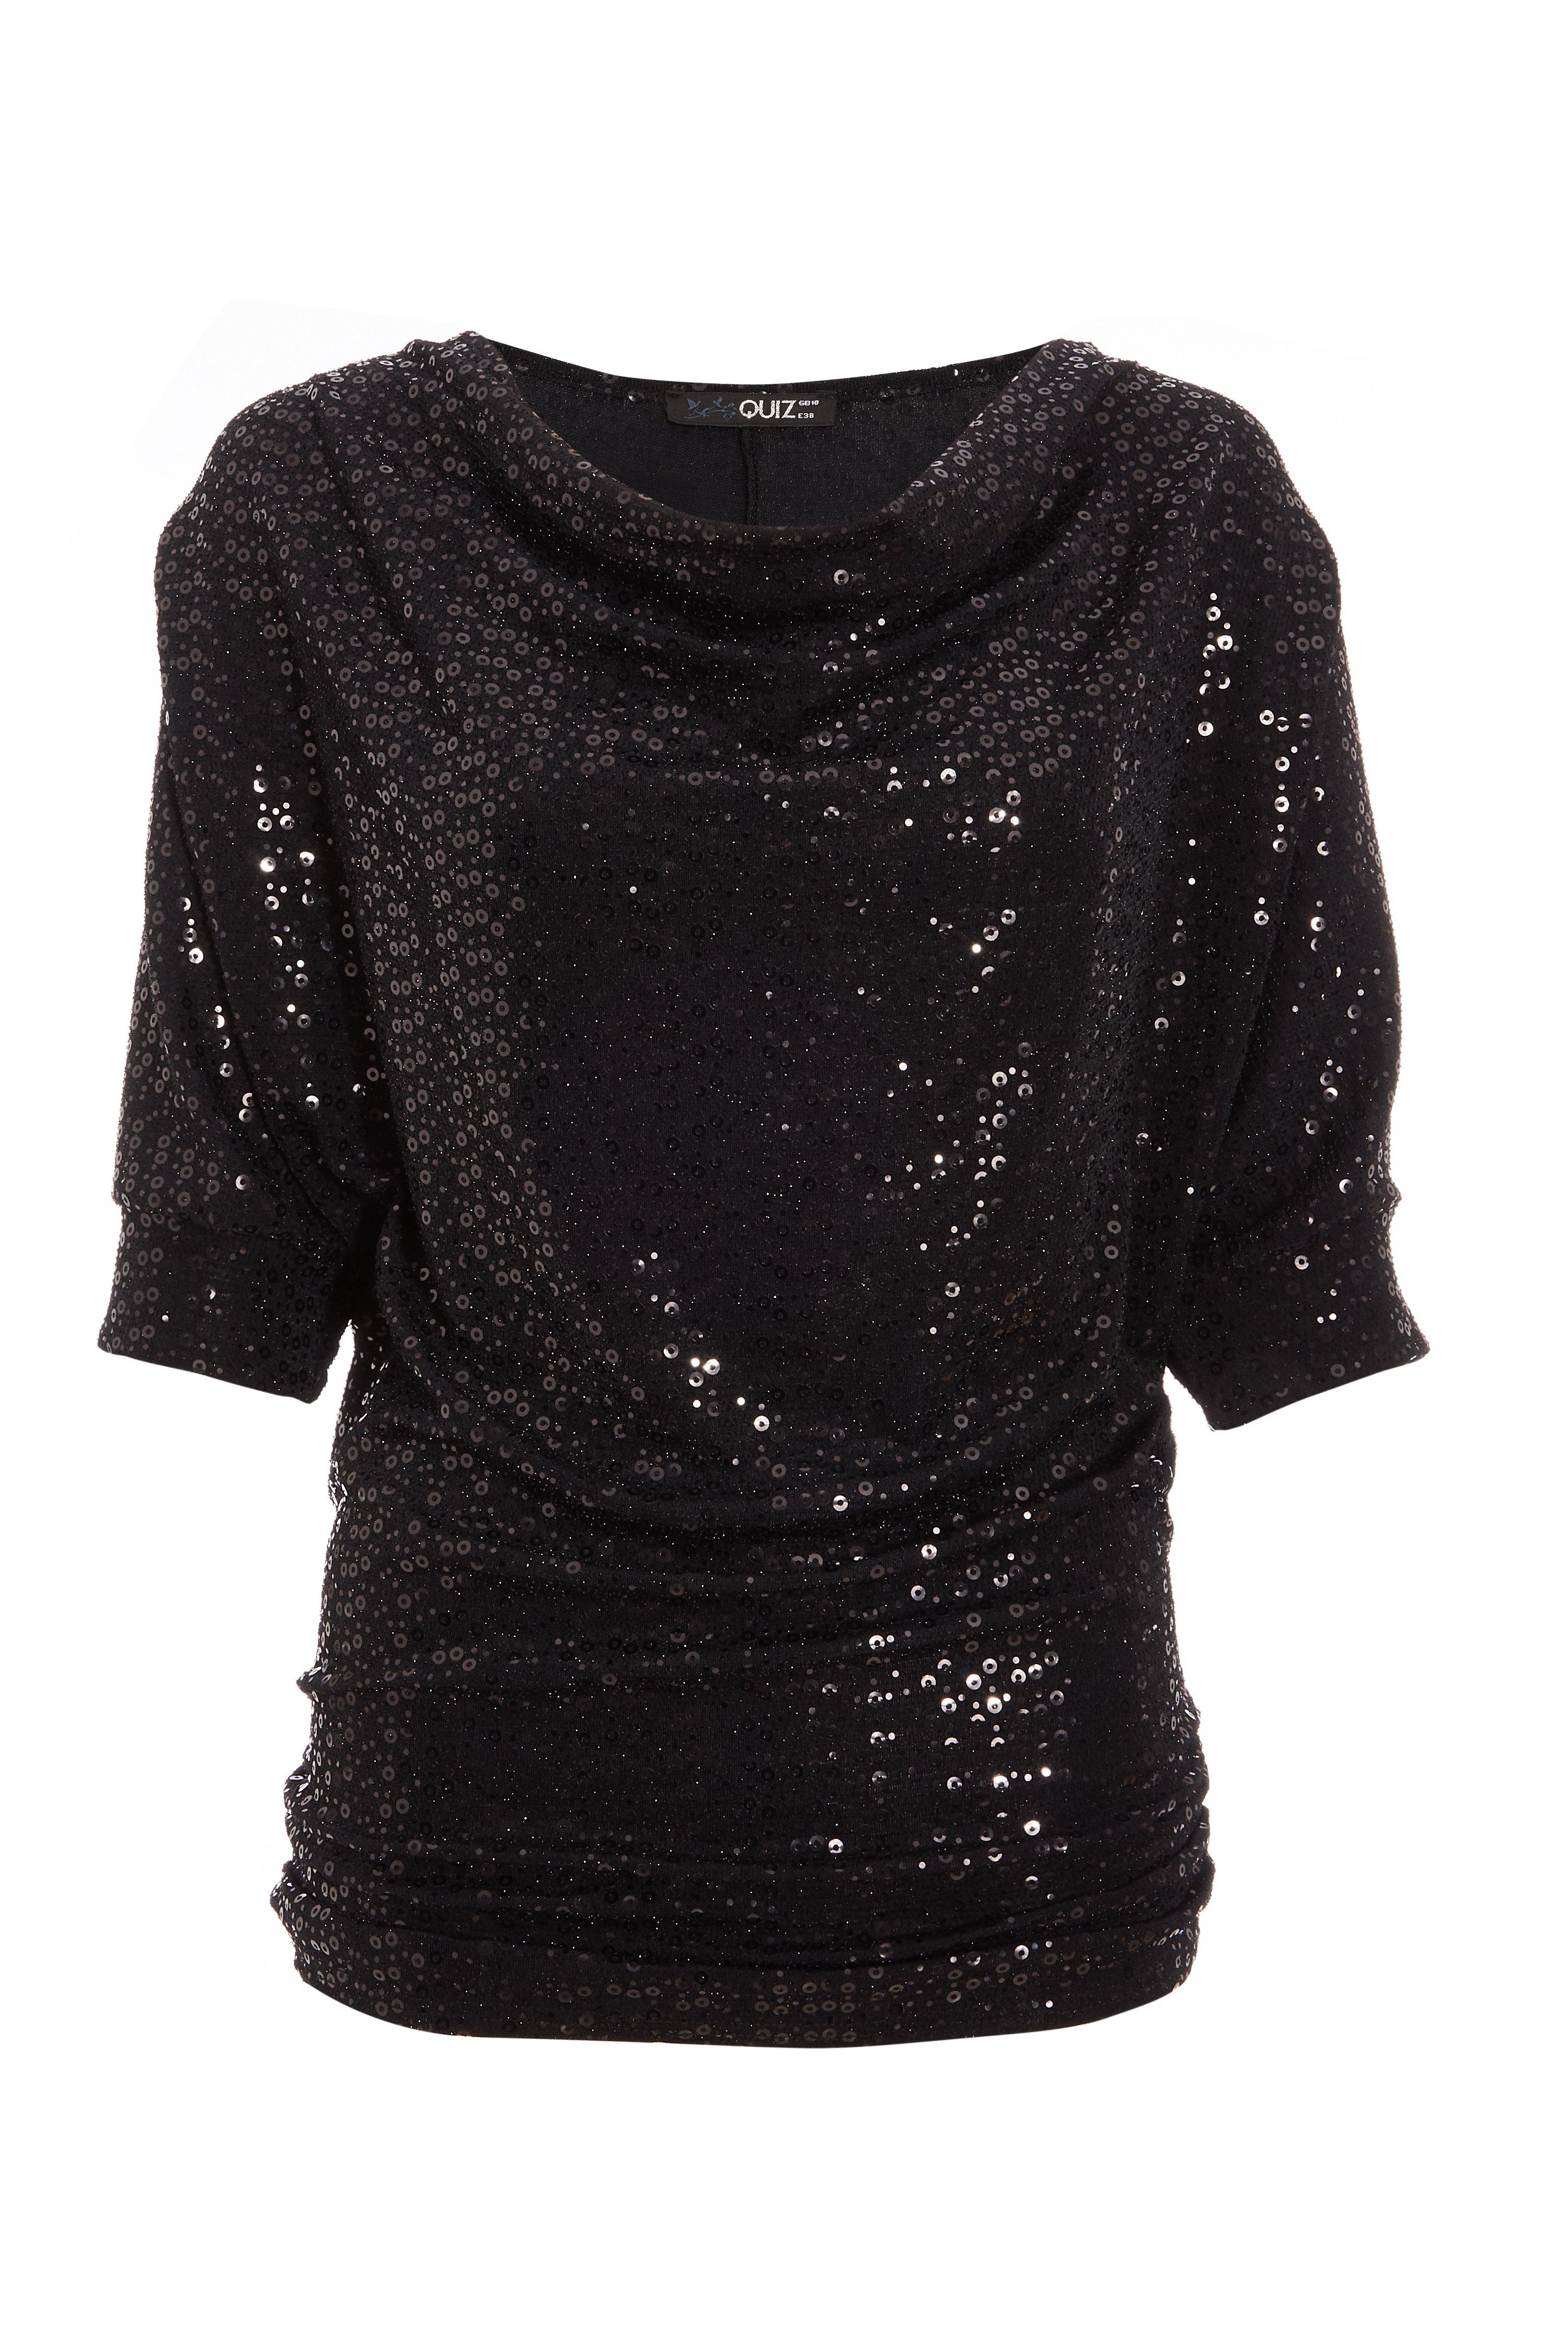 Black Glitter Cowl Neck Top - Quiz Clothing